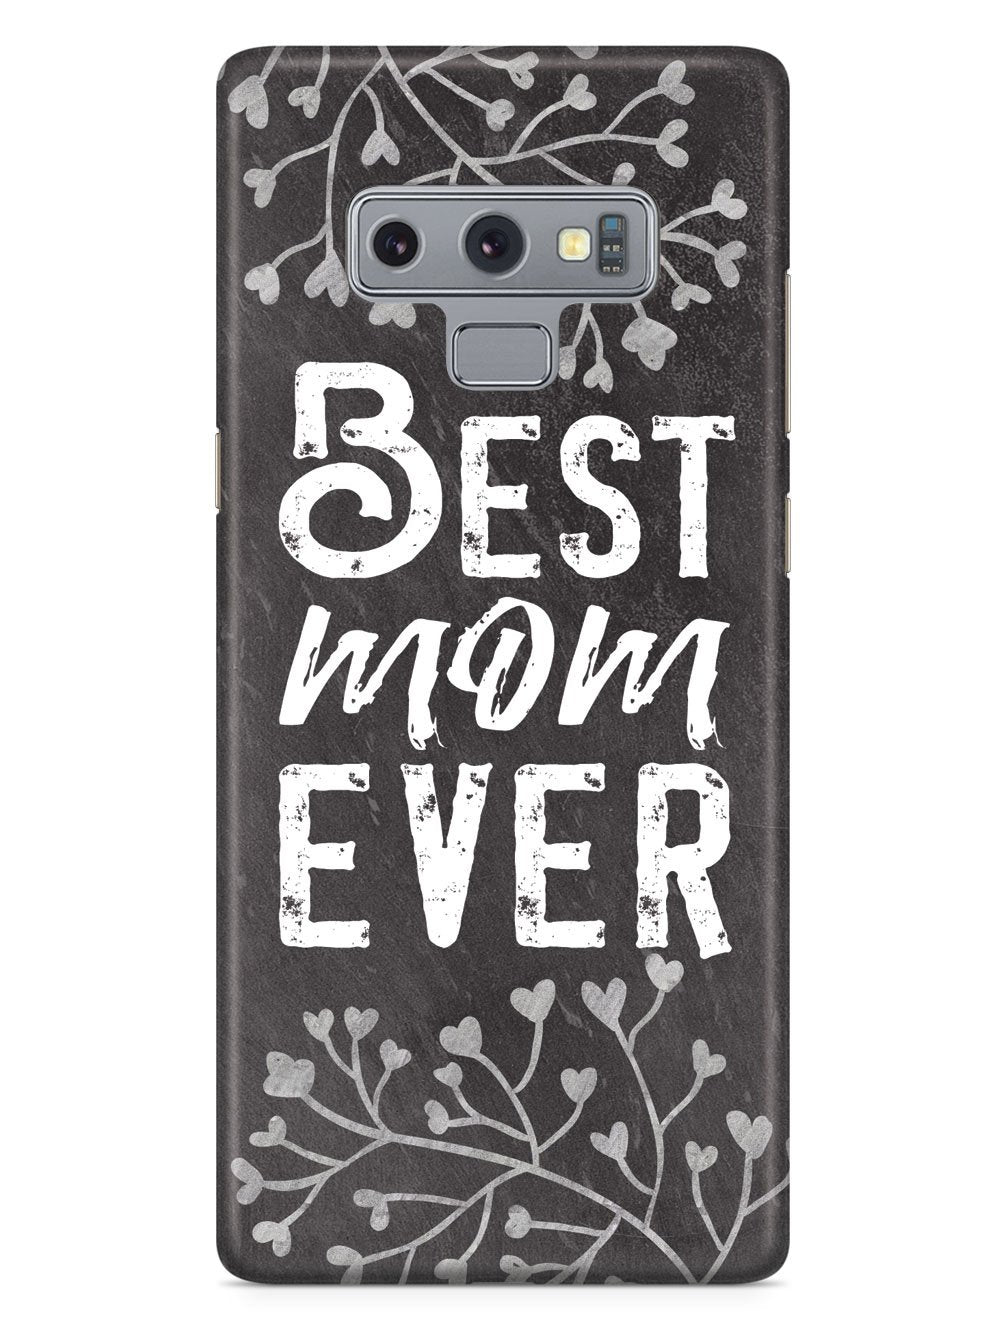 Best Mom Ever - Chalkboard Type - Black Case